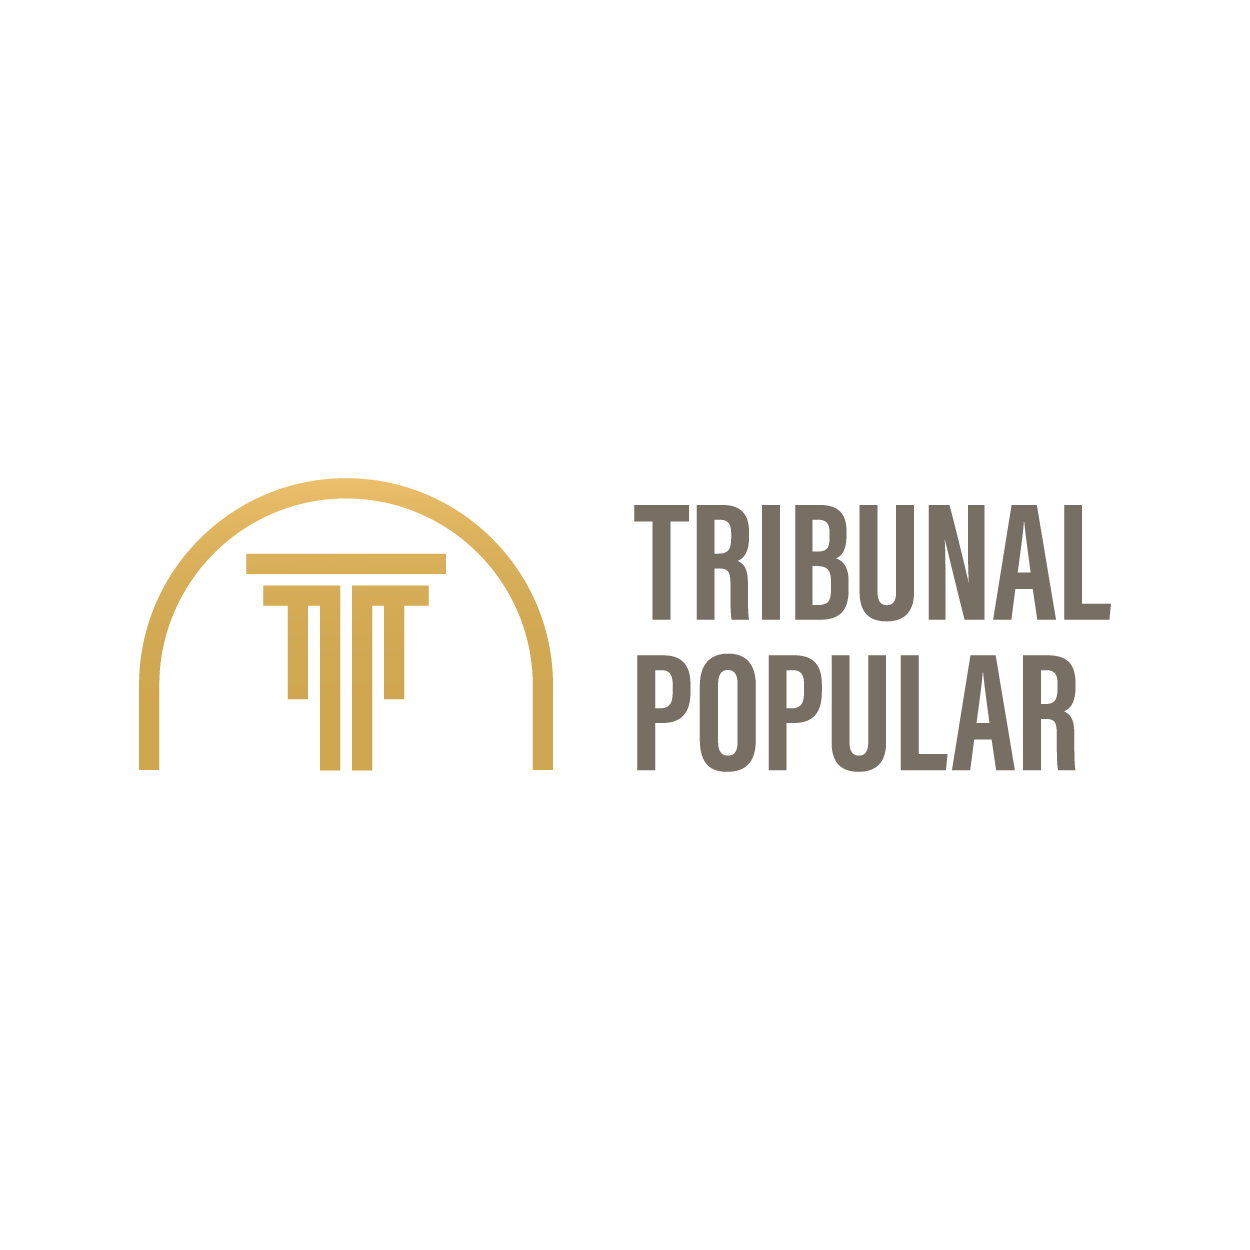 TRIBUNAL POPULAR